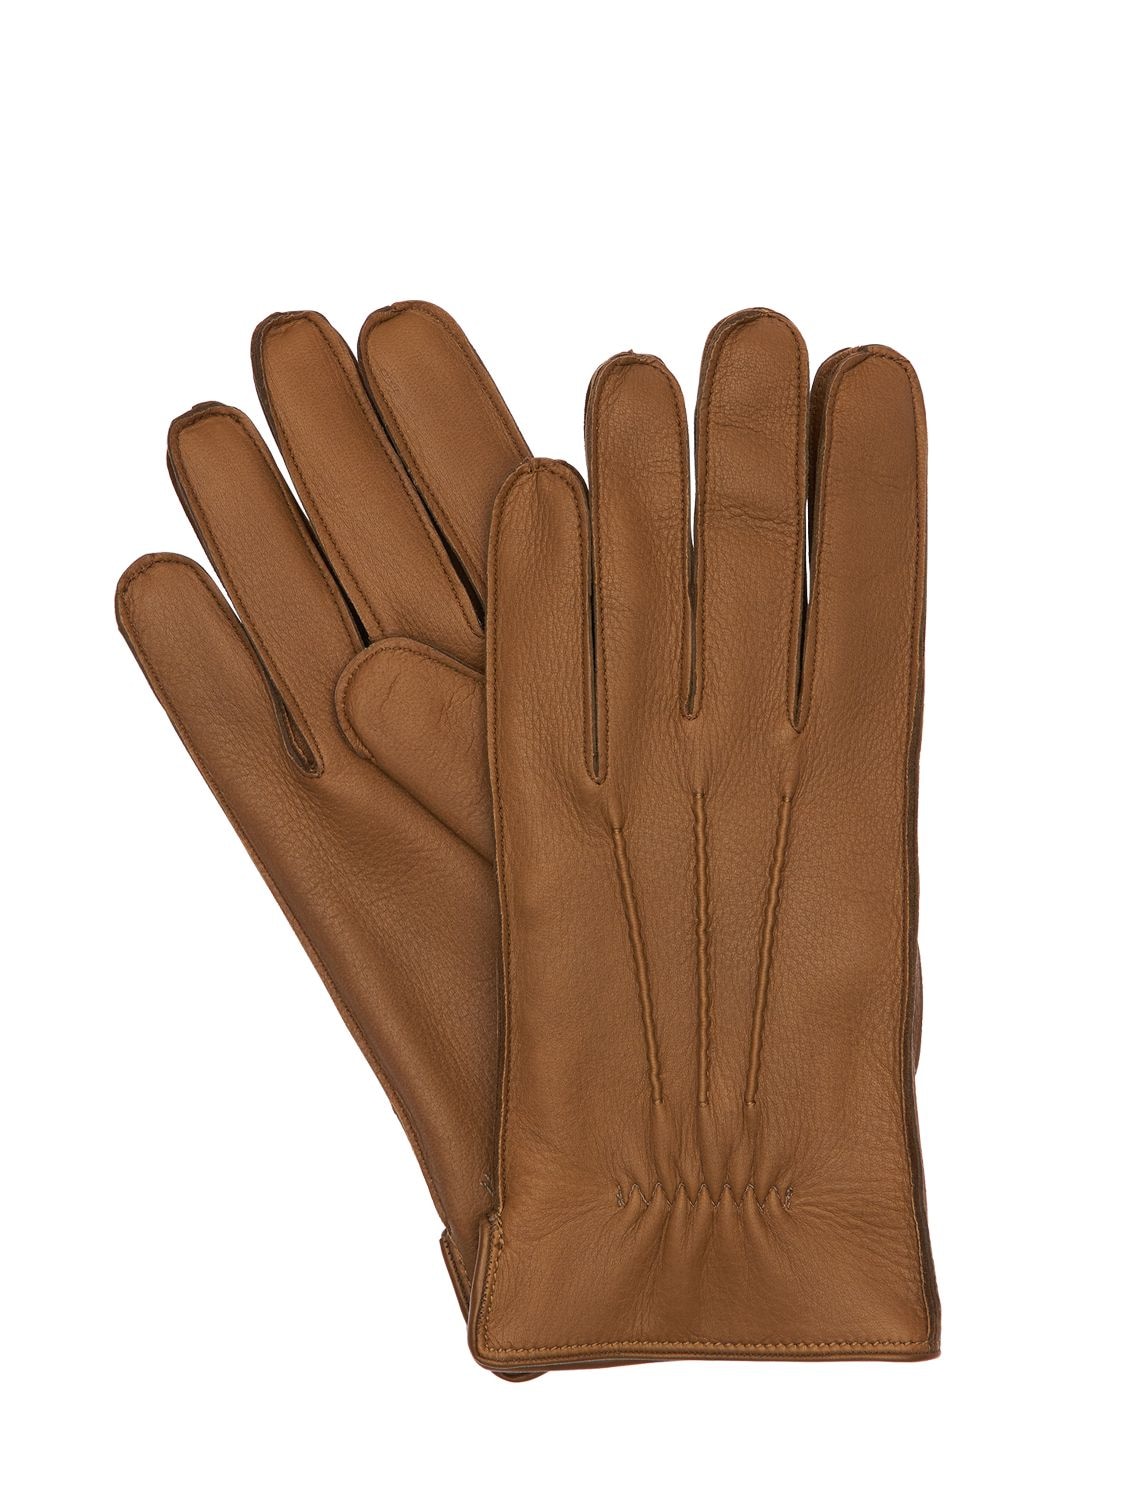 Mario Portolano Leather Gloves In Light Brown